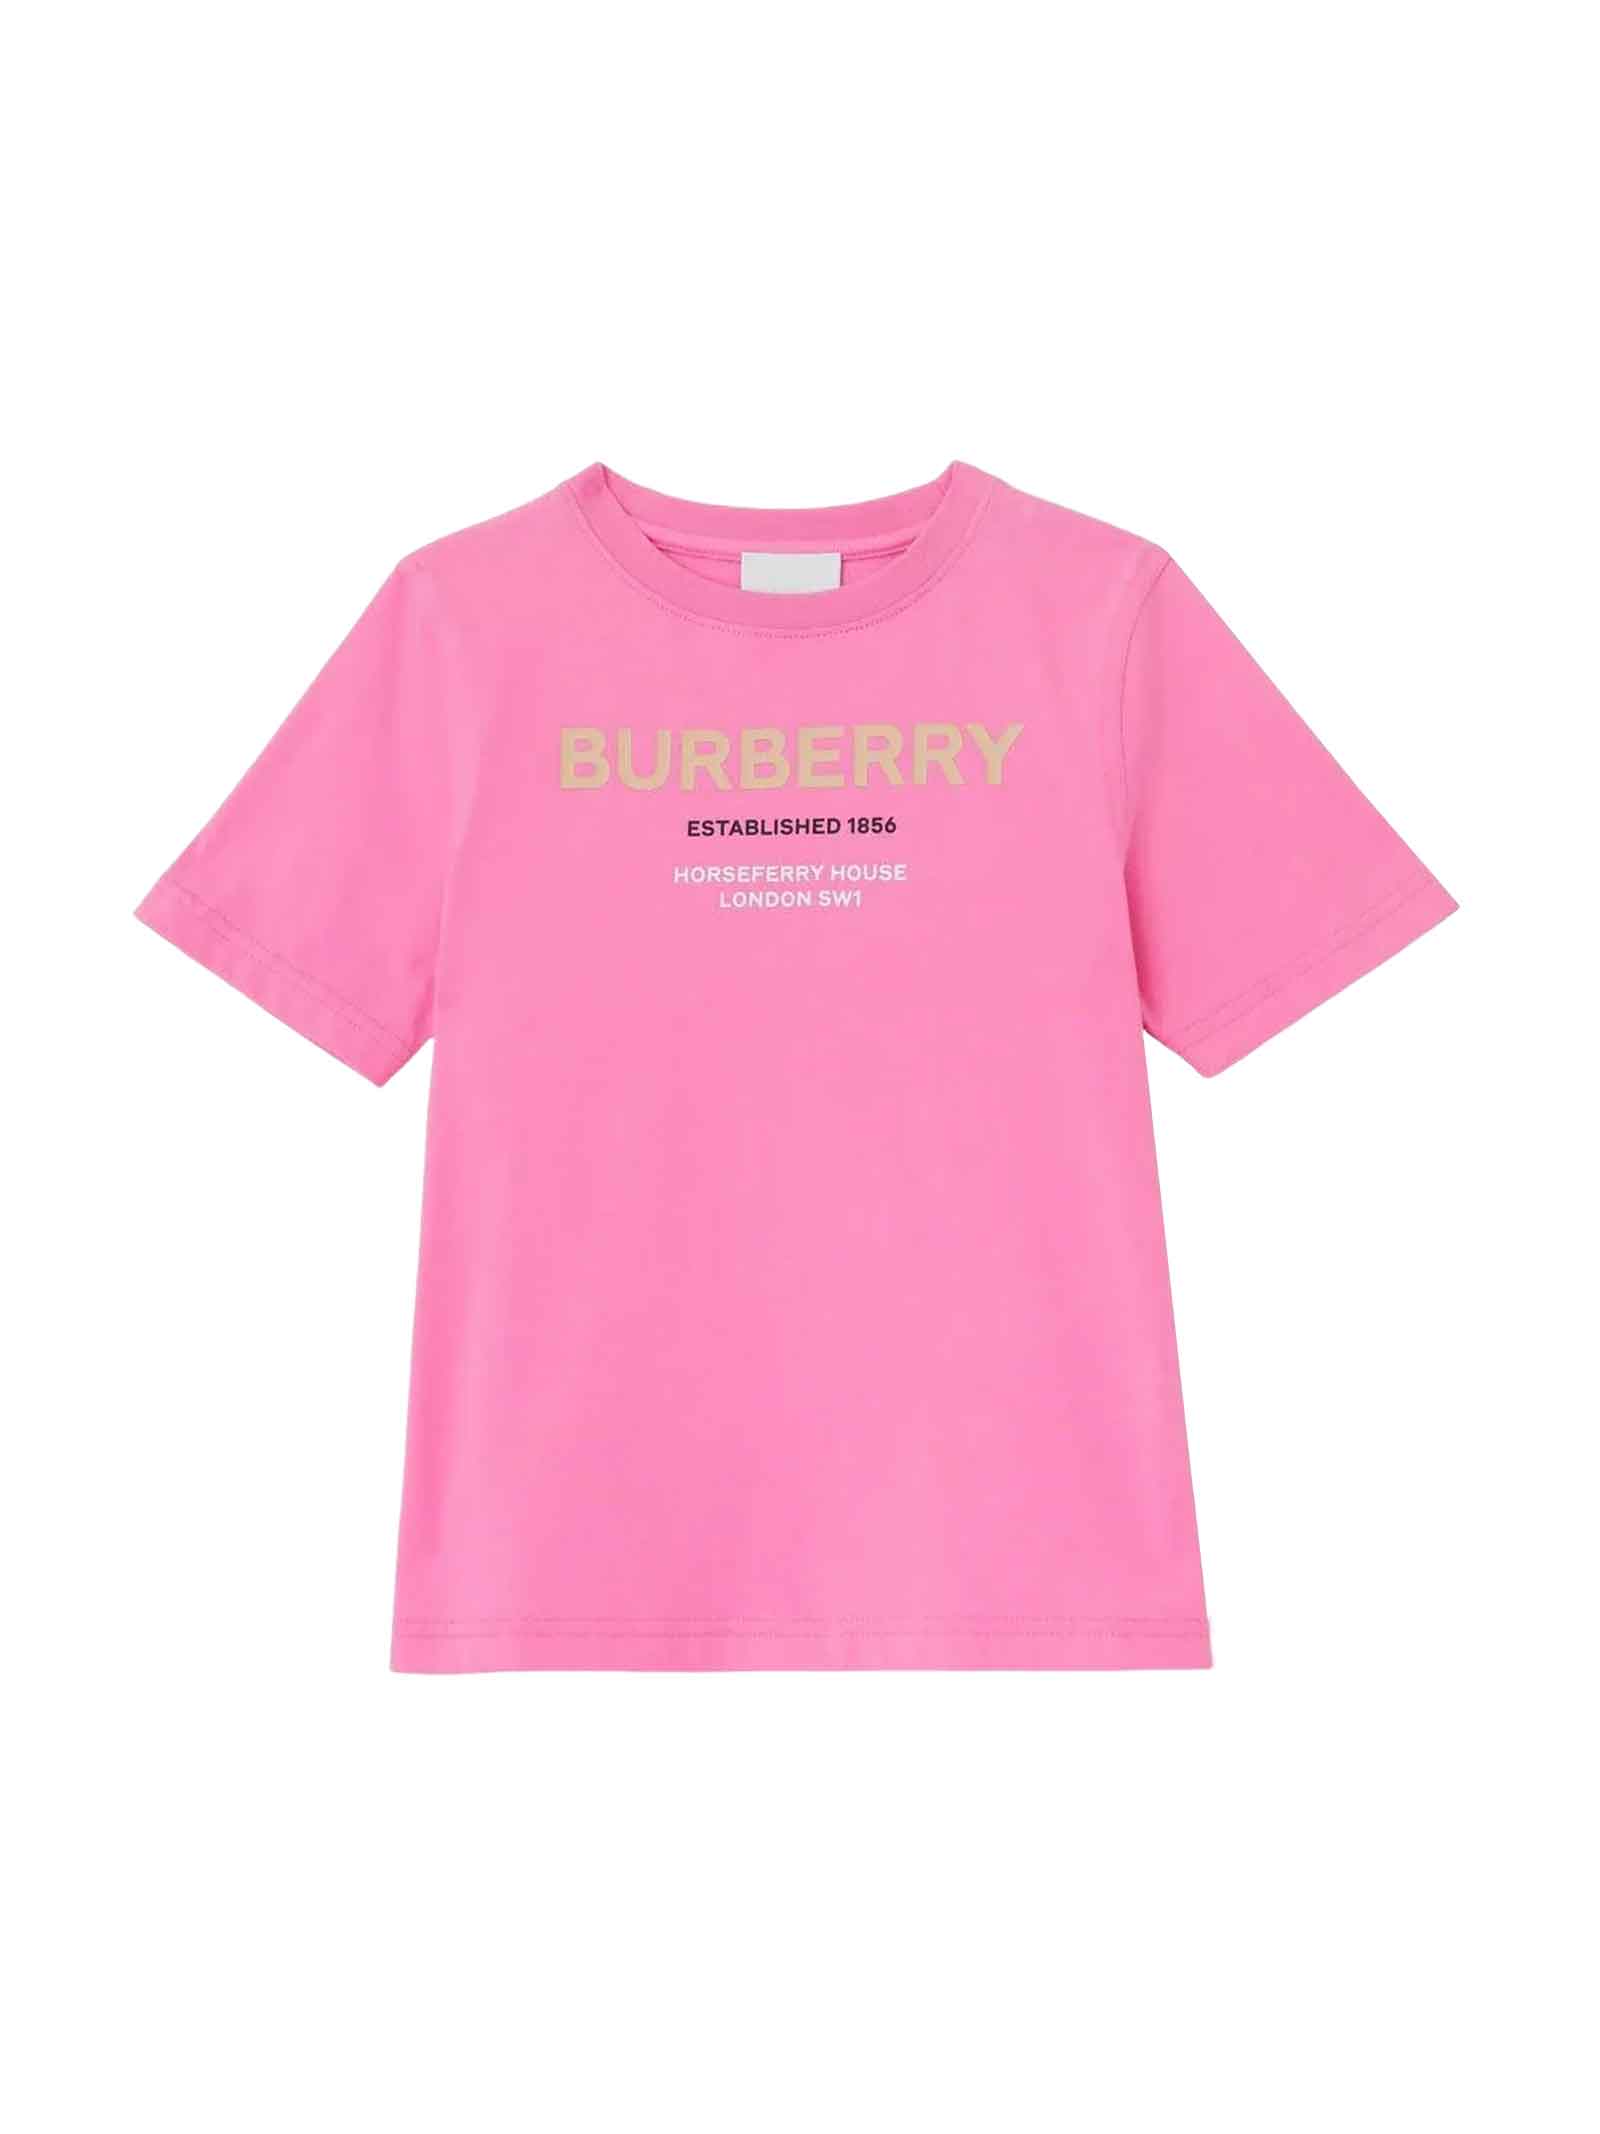 Burberry Pink T-shirt Girl